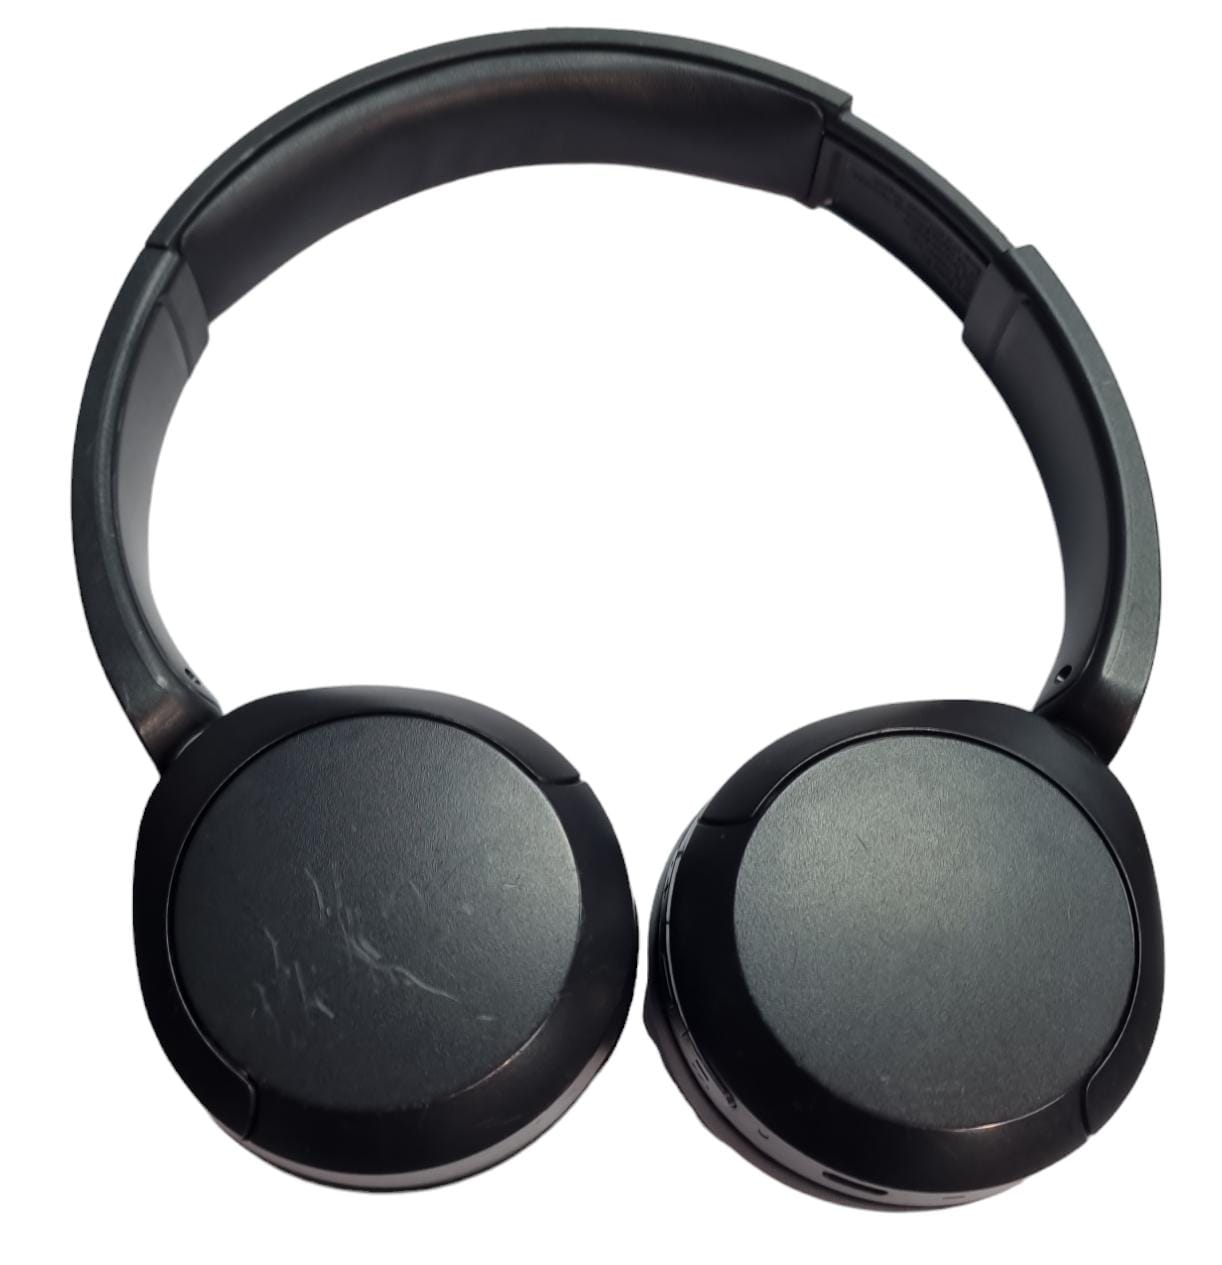 Sony WH-CH520 Wireless Headphones - Black - No Box